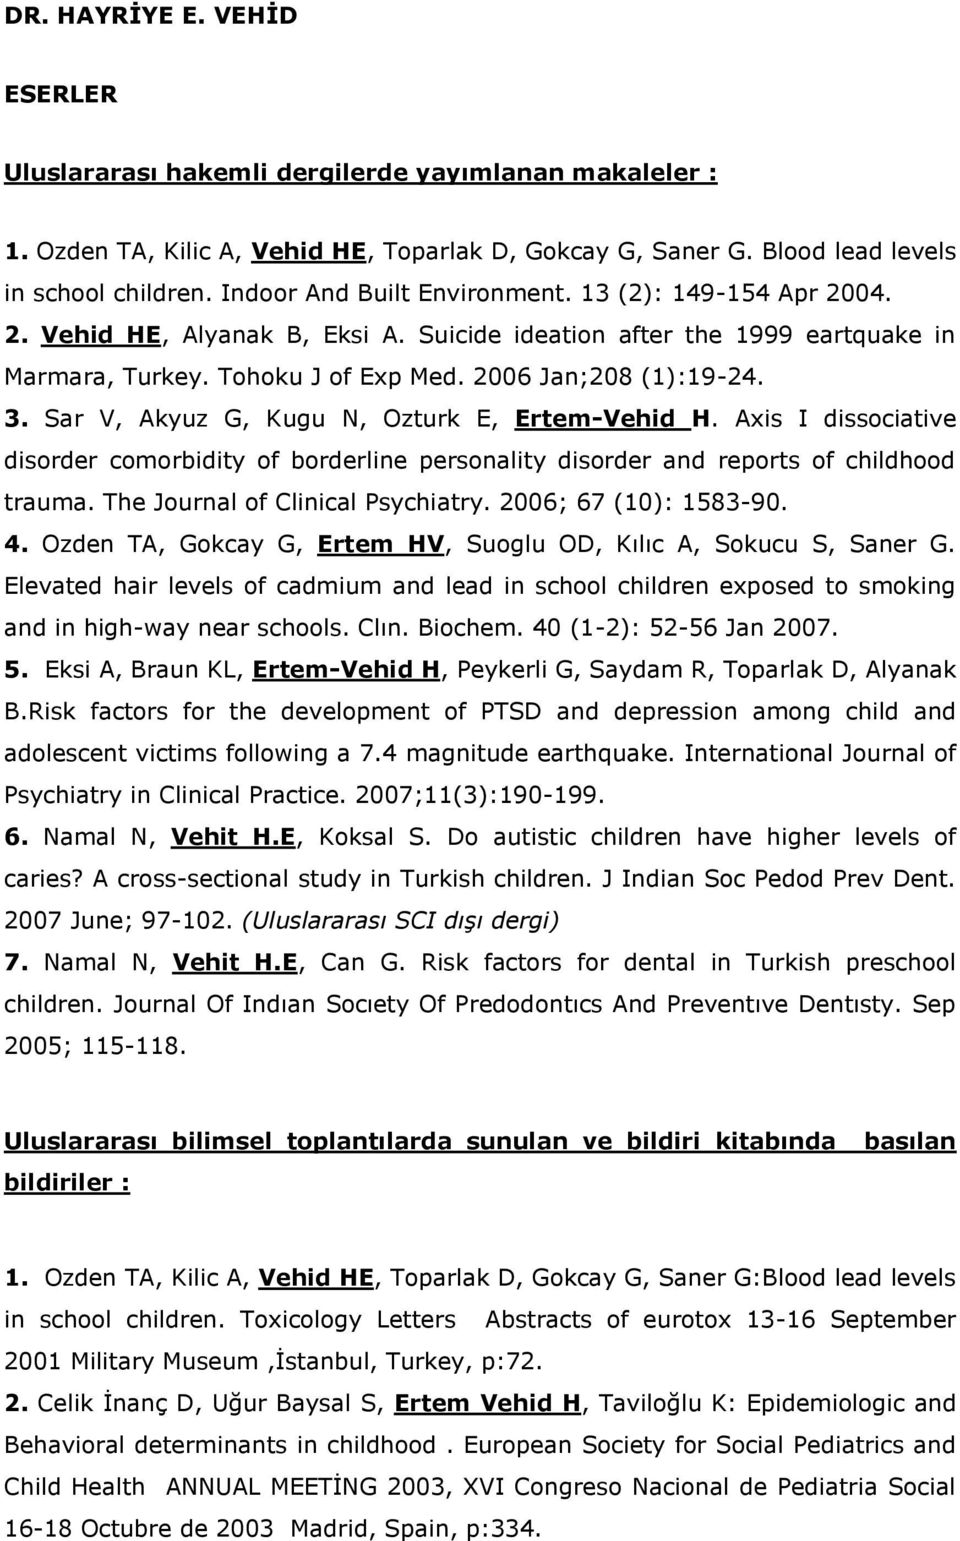 Sar V, Akyuz G, Kugu N, Ozturk E, Ertem-Vehid H. Axis I dissociative disorder comorbidity of borderline personality disorder and reports of childhood trauma. The Journal of Clinical Psychiatry.